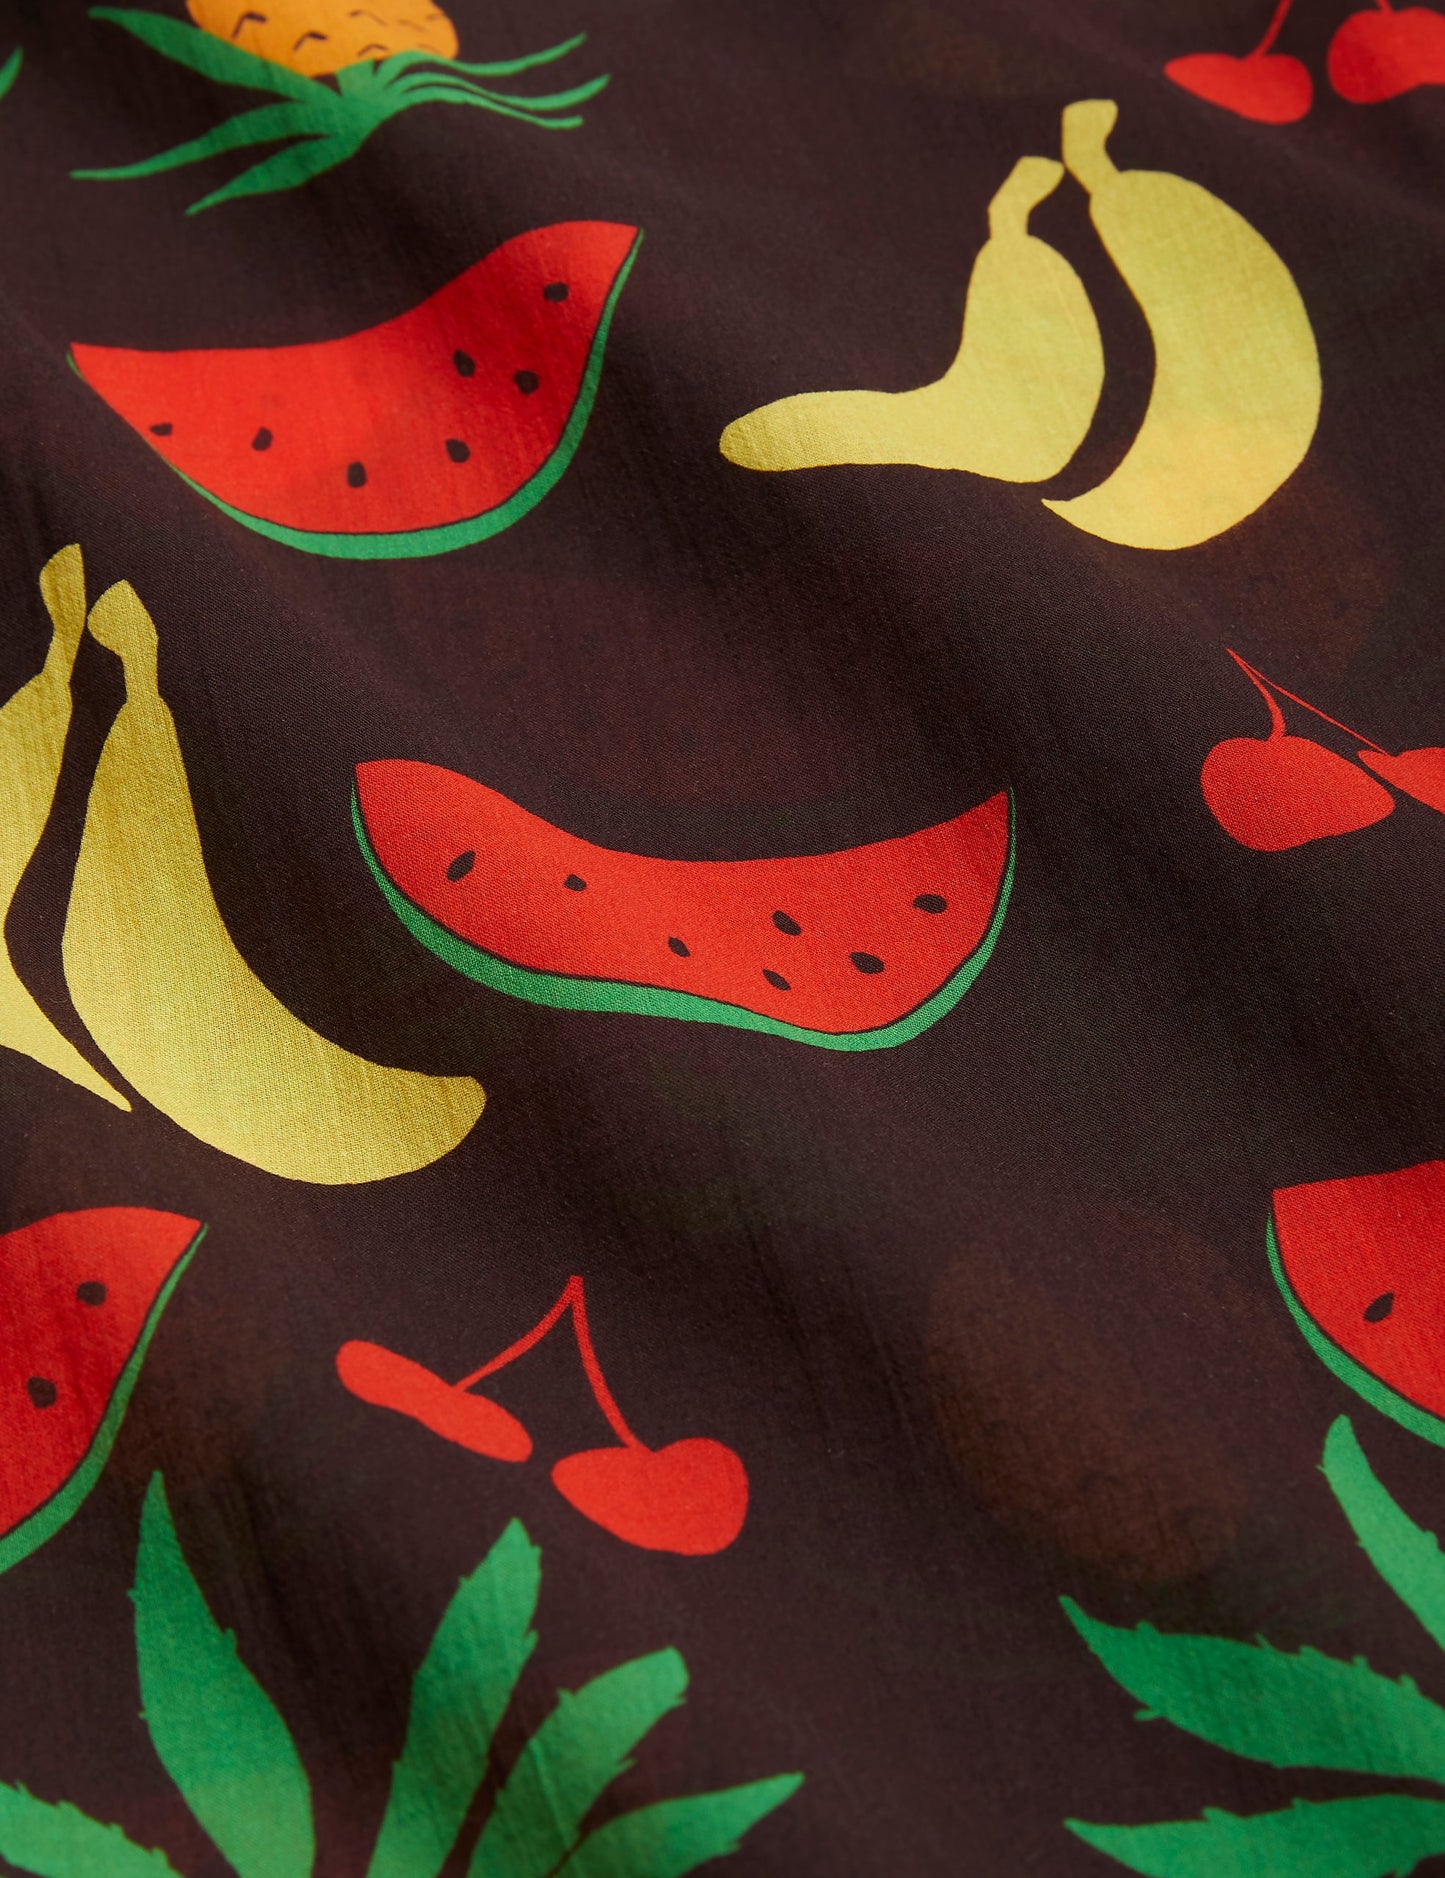 Fruits woven shirt